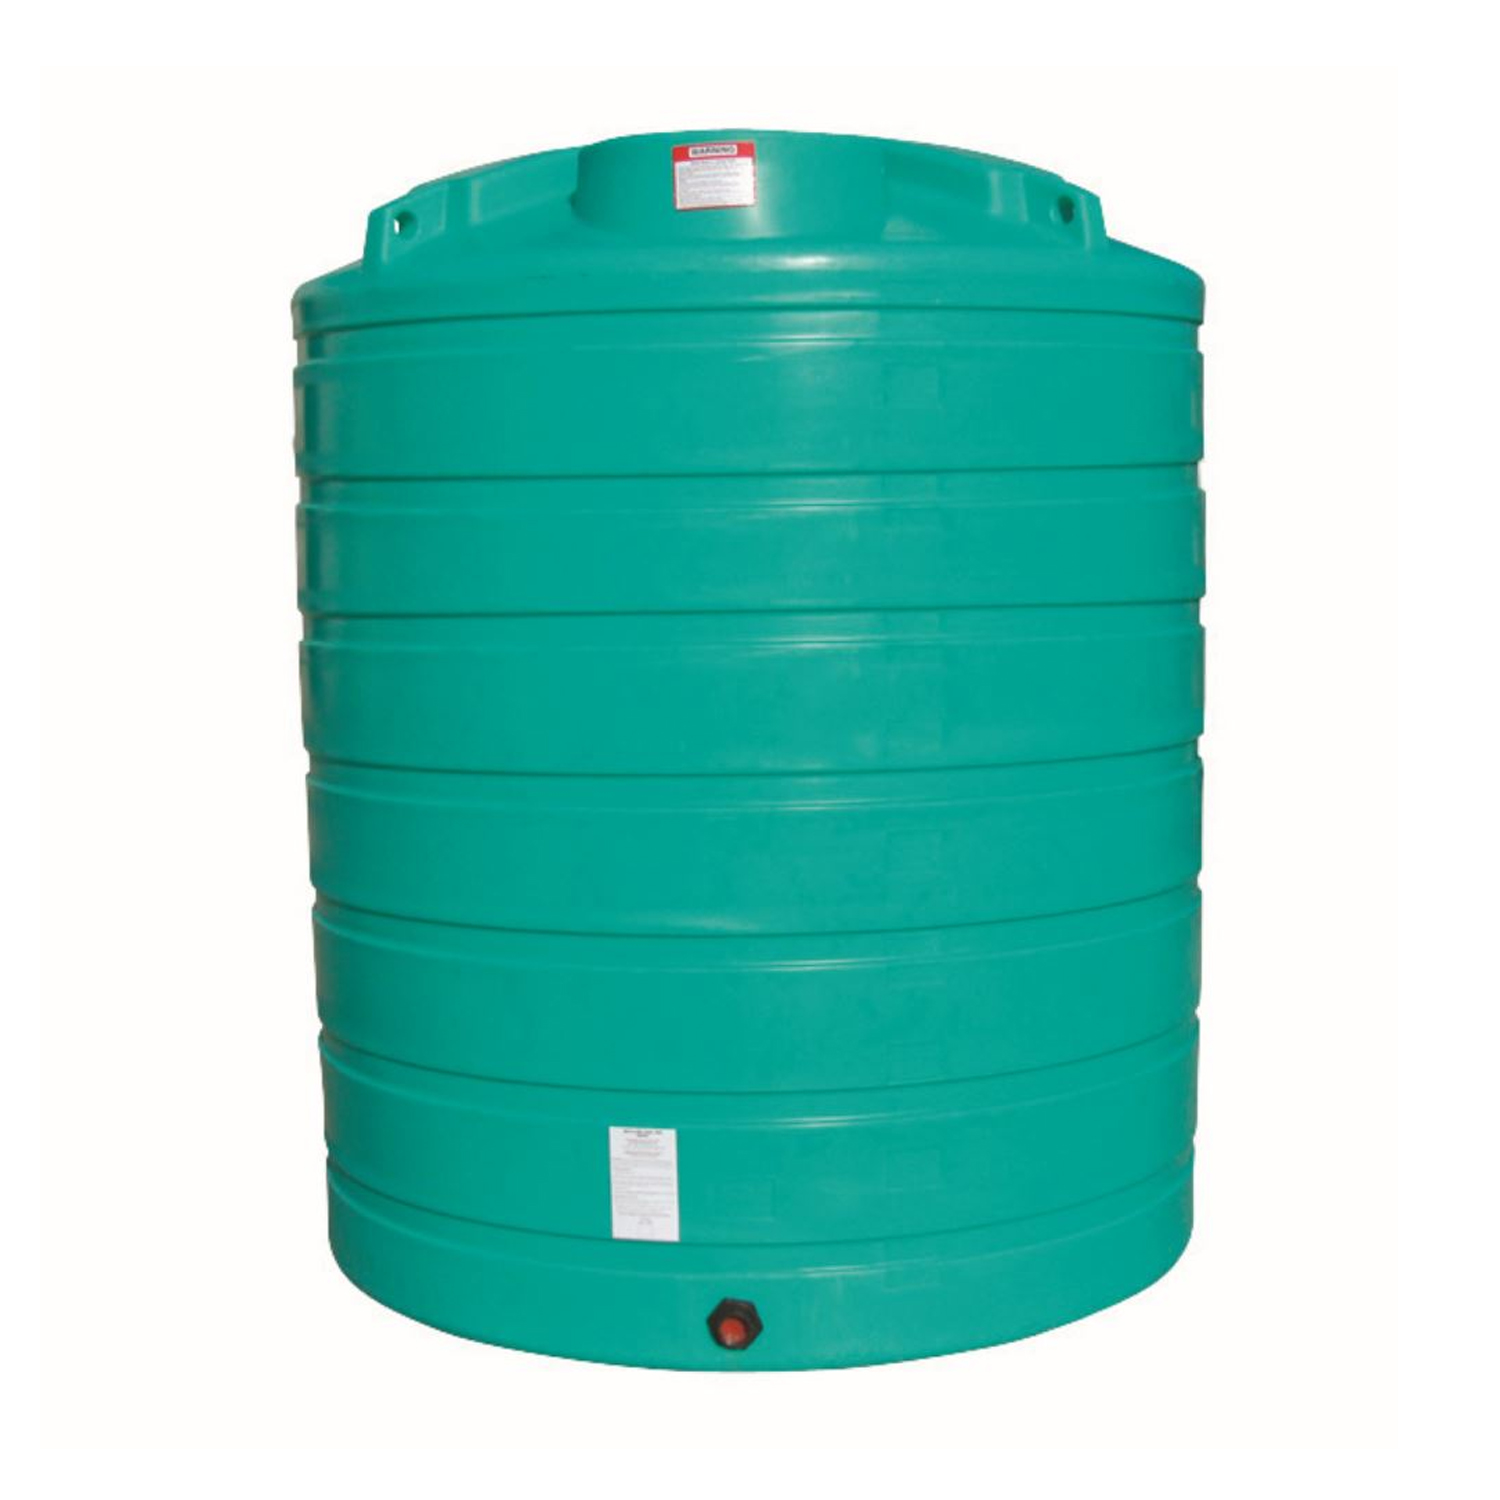 Enduraplas 2,100 Gallon Flat Bottom Storage Tank